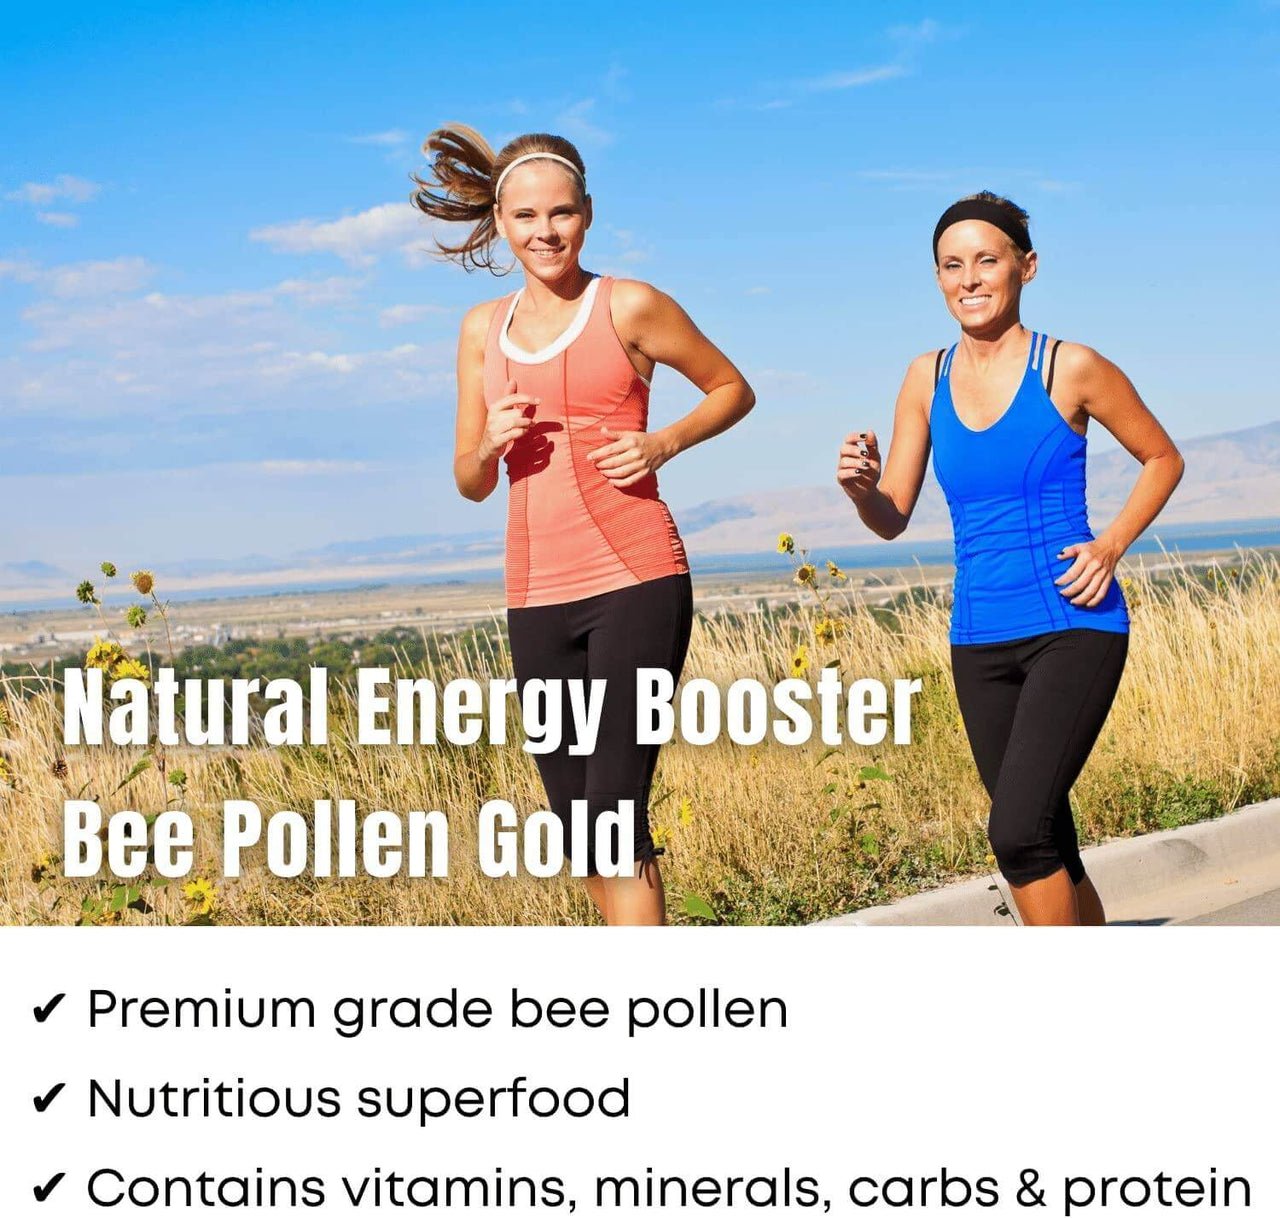 Nutridom Bee Pollen Gold 200 Grams - Nutrition Plus